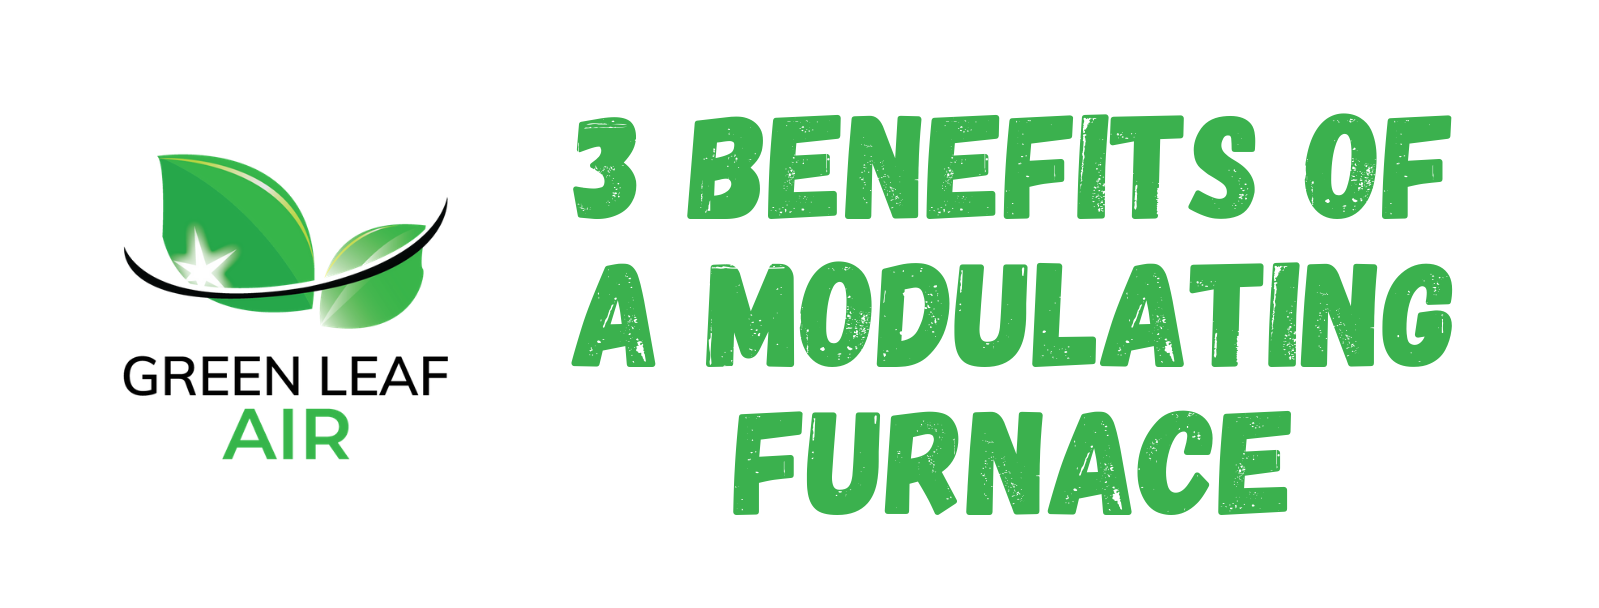 3 Benefits of a Modulating Furnace